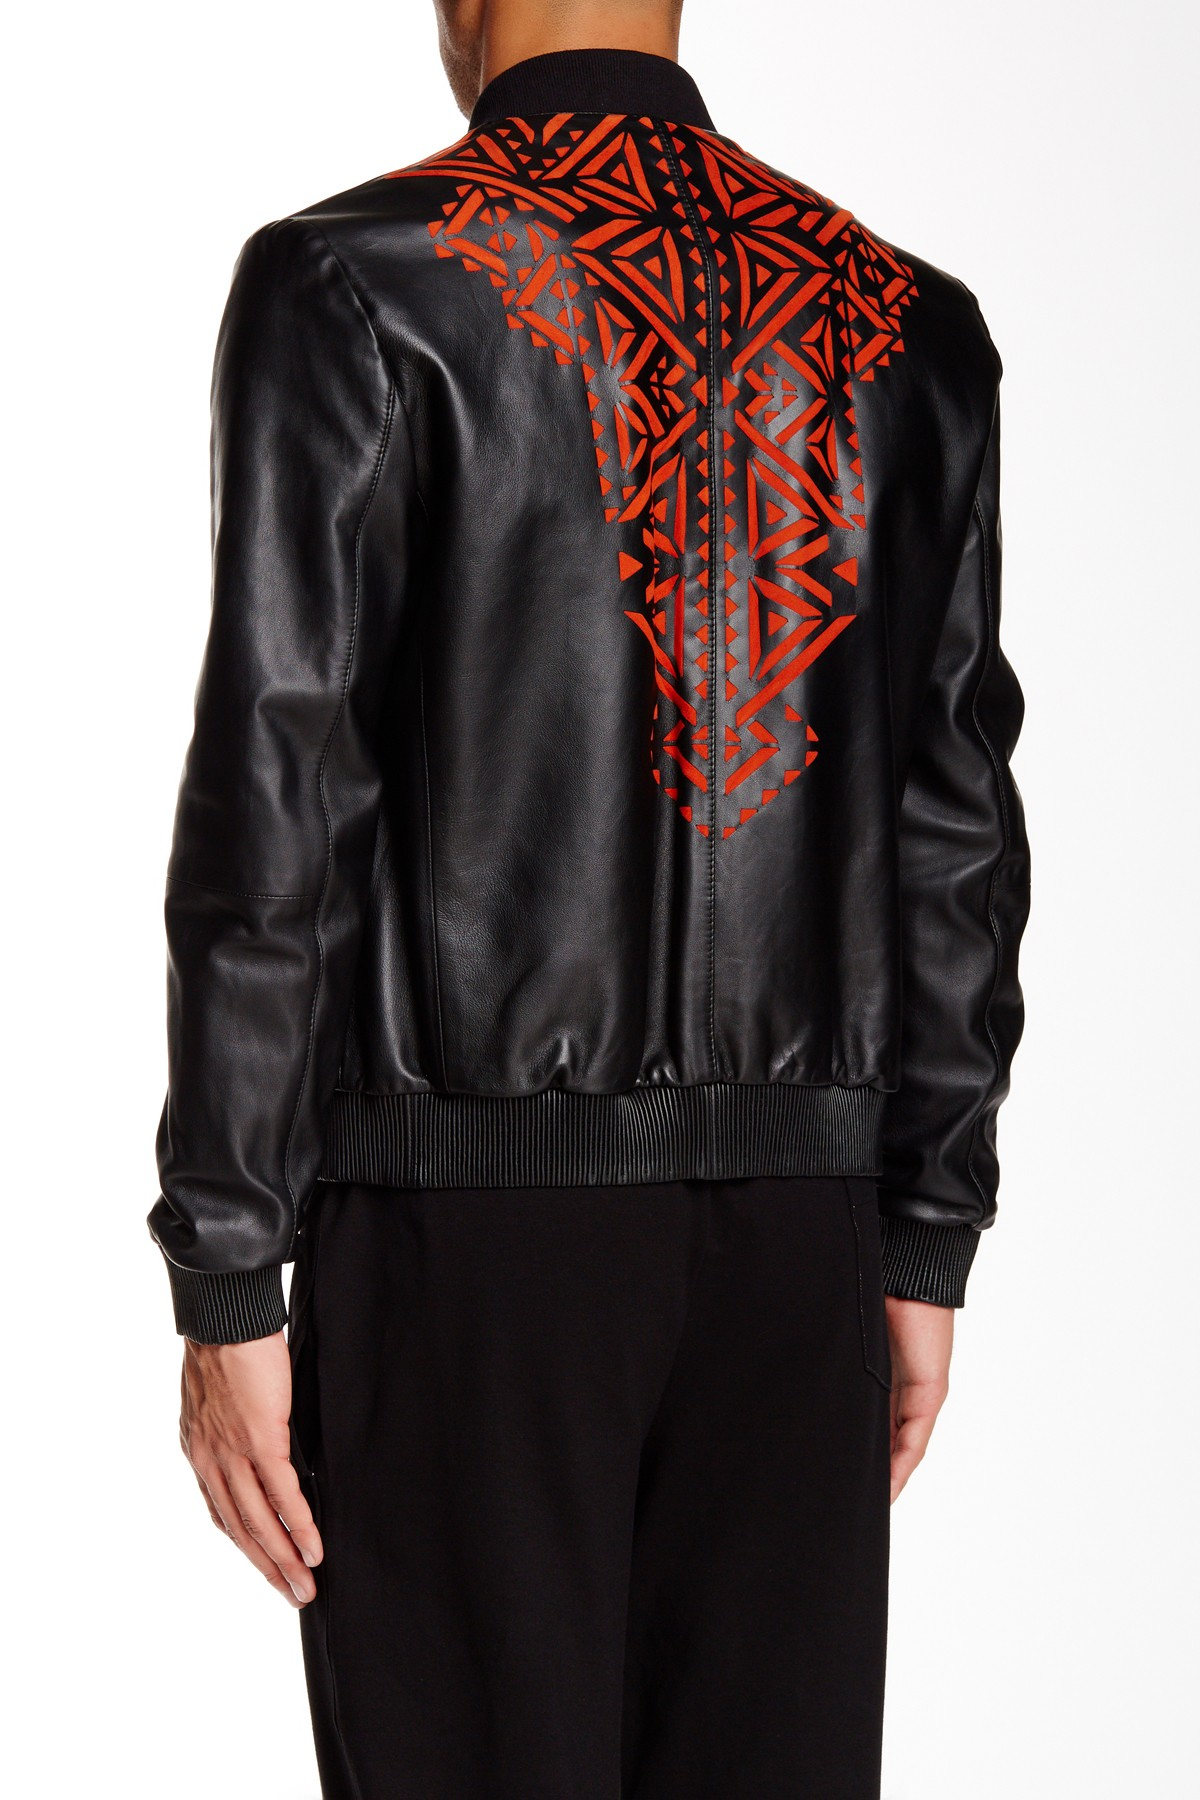 Versace Laser Cut Genuine Leather Jacket in Black for Men | Lyst